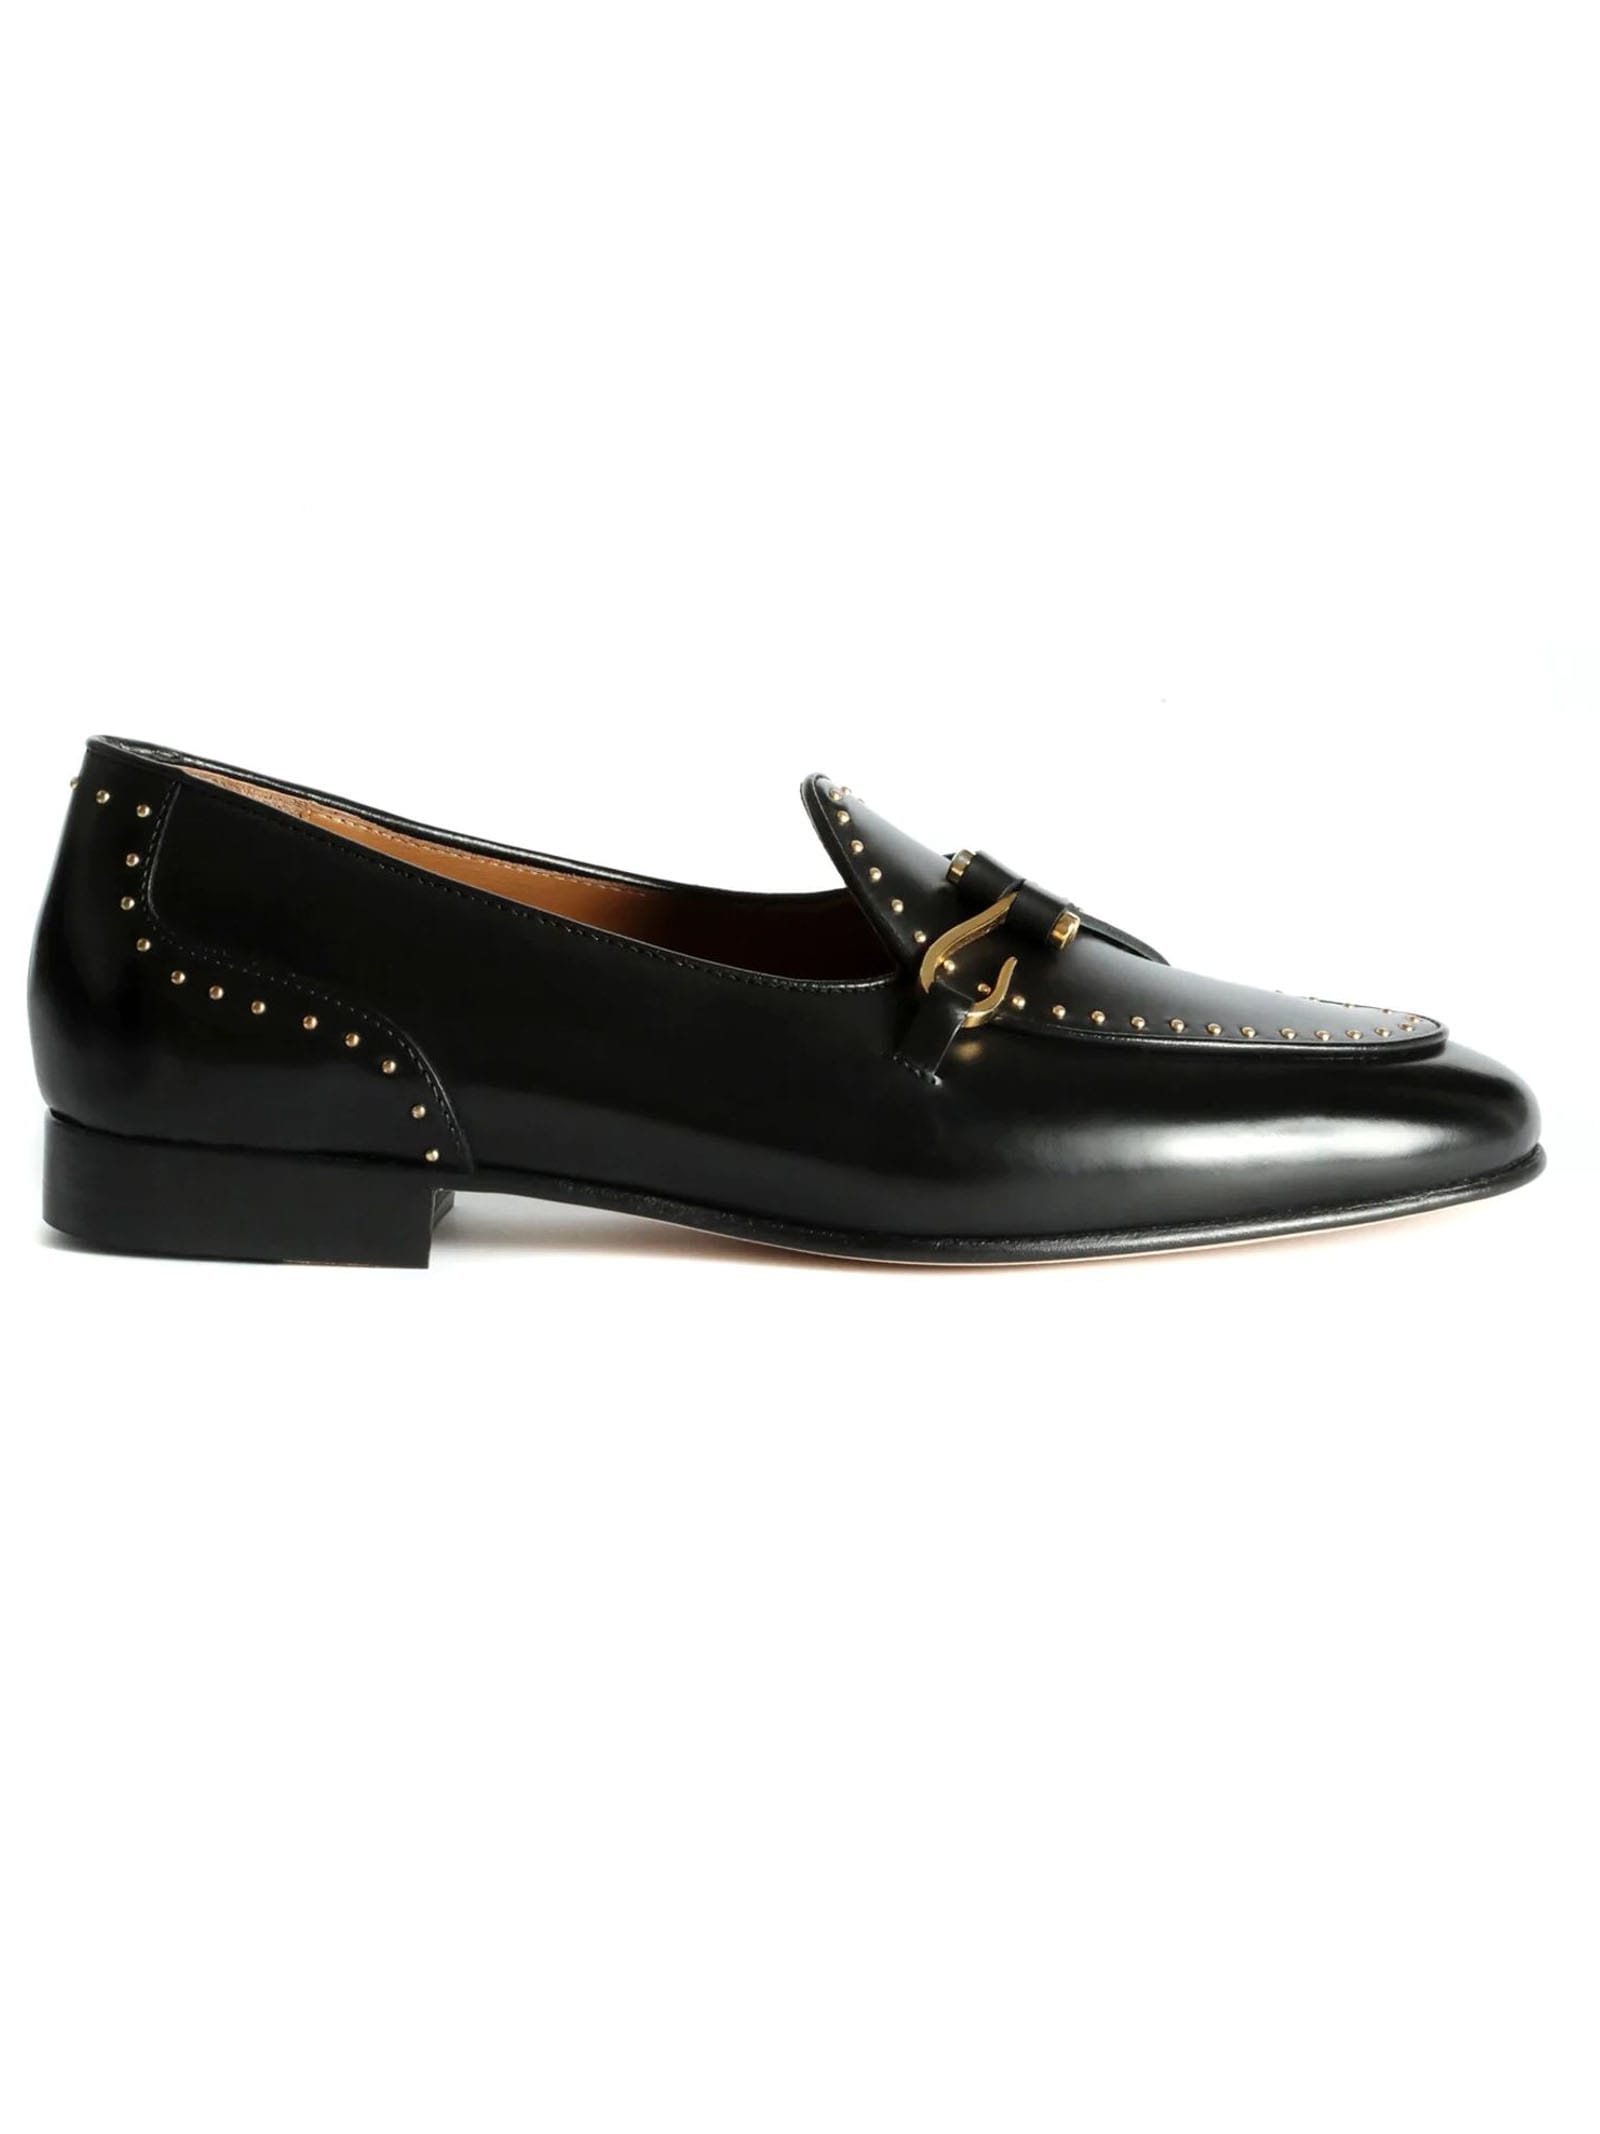 Shop Edhen Milano Black Calf Leather Comporta Loafers